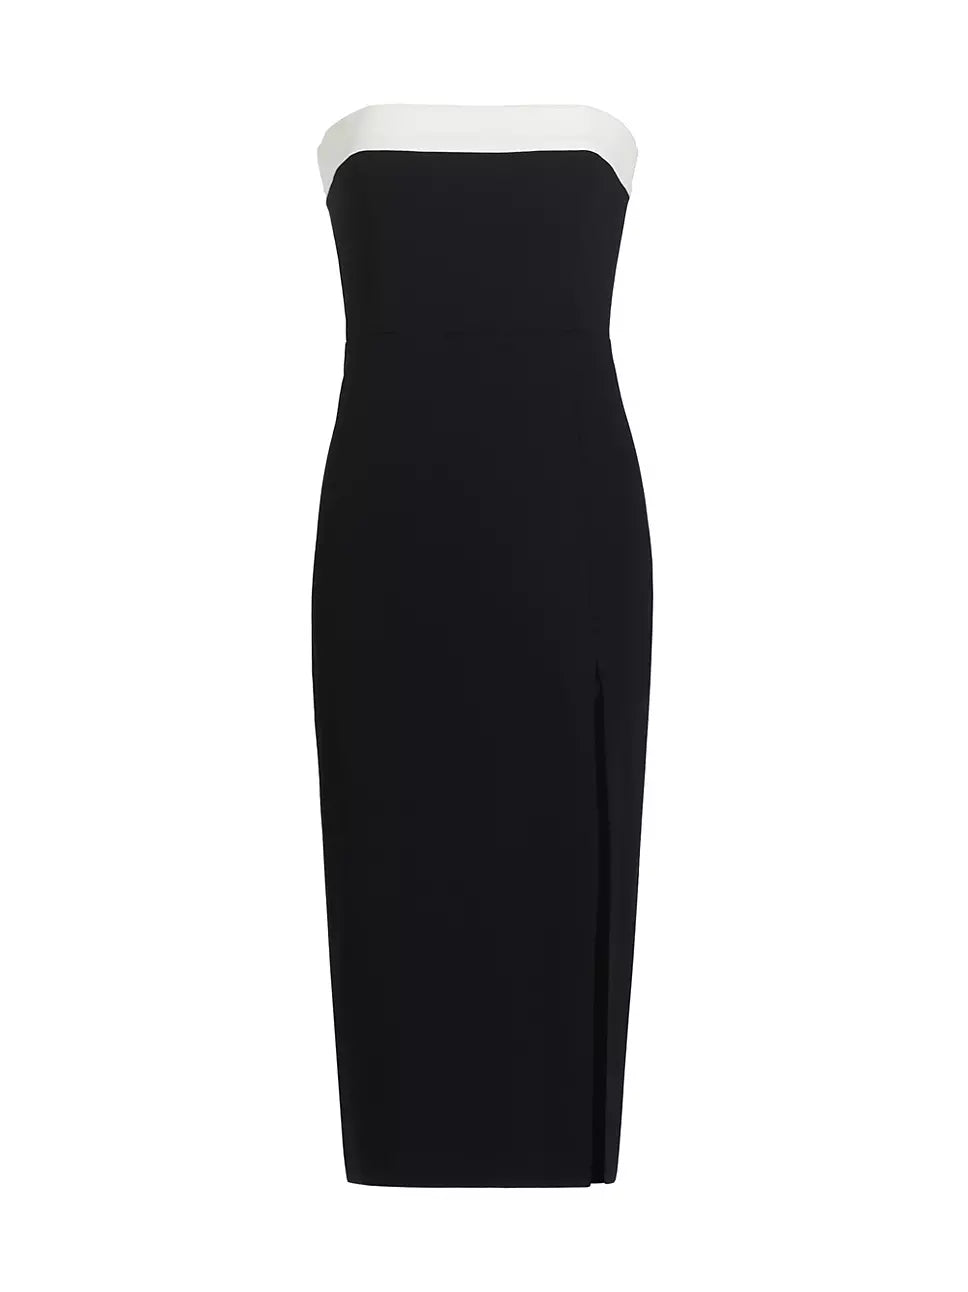 Amanda Uprichard Keller Strapless Midi Dress in Black/Ivory